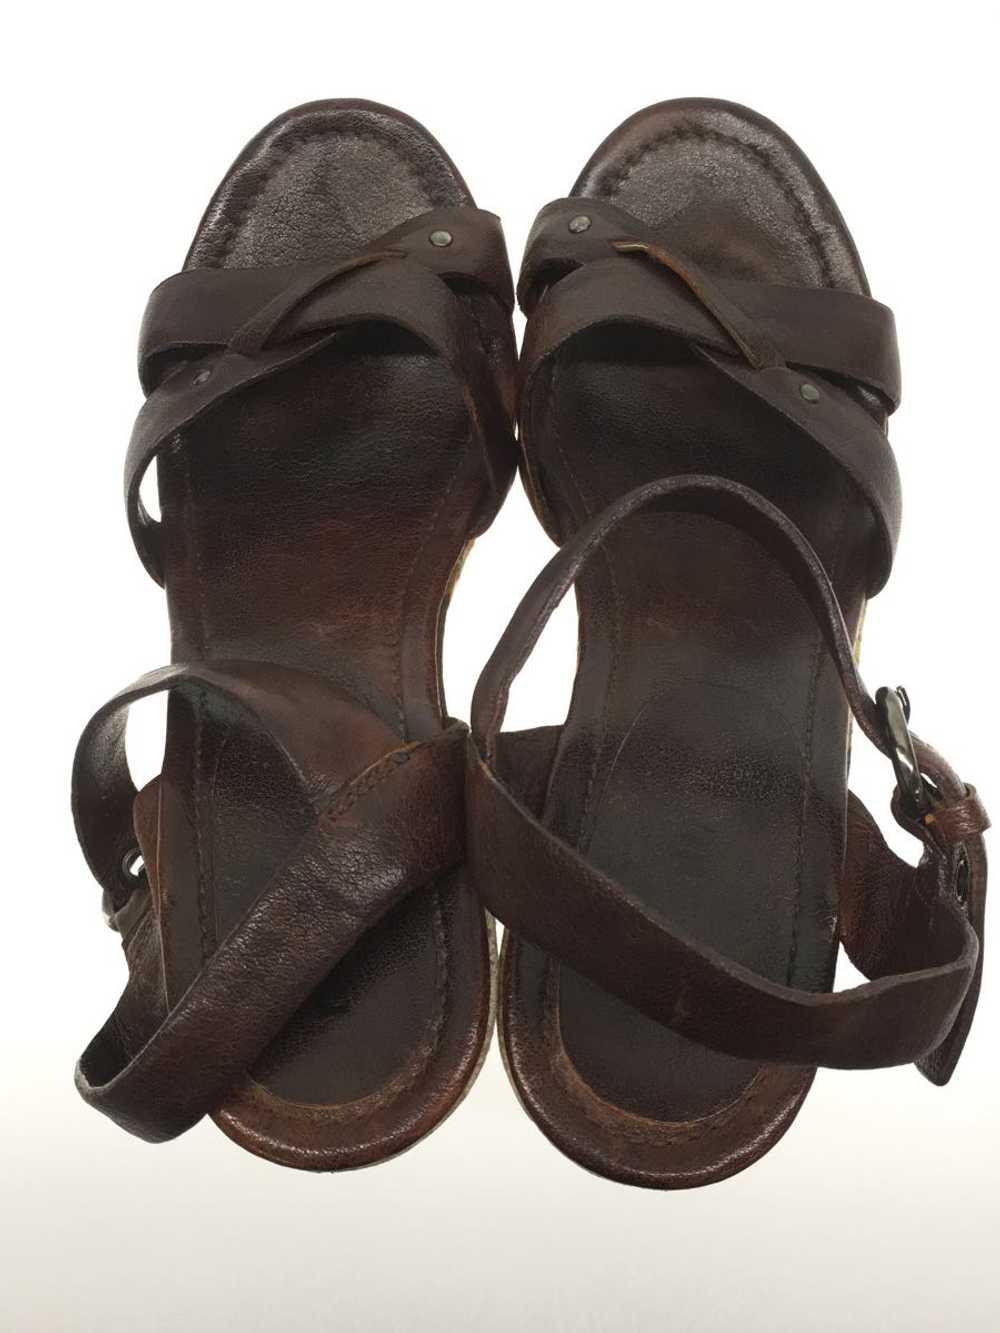 Miu Miu Wedgwood/Sandals/36/Brw/ Shoes BbZ58 - image 4